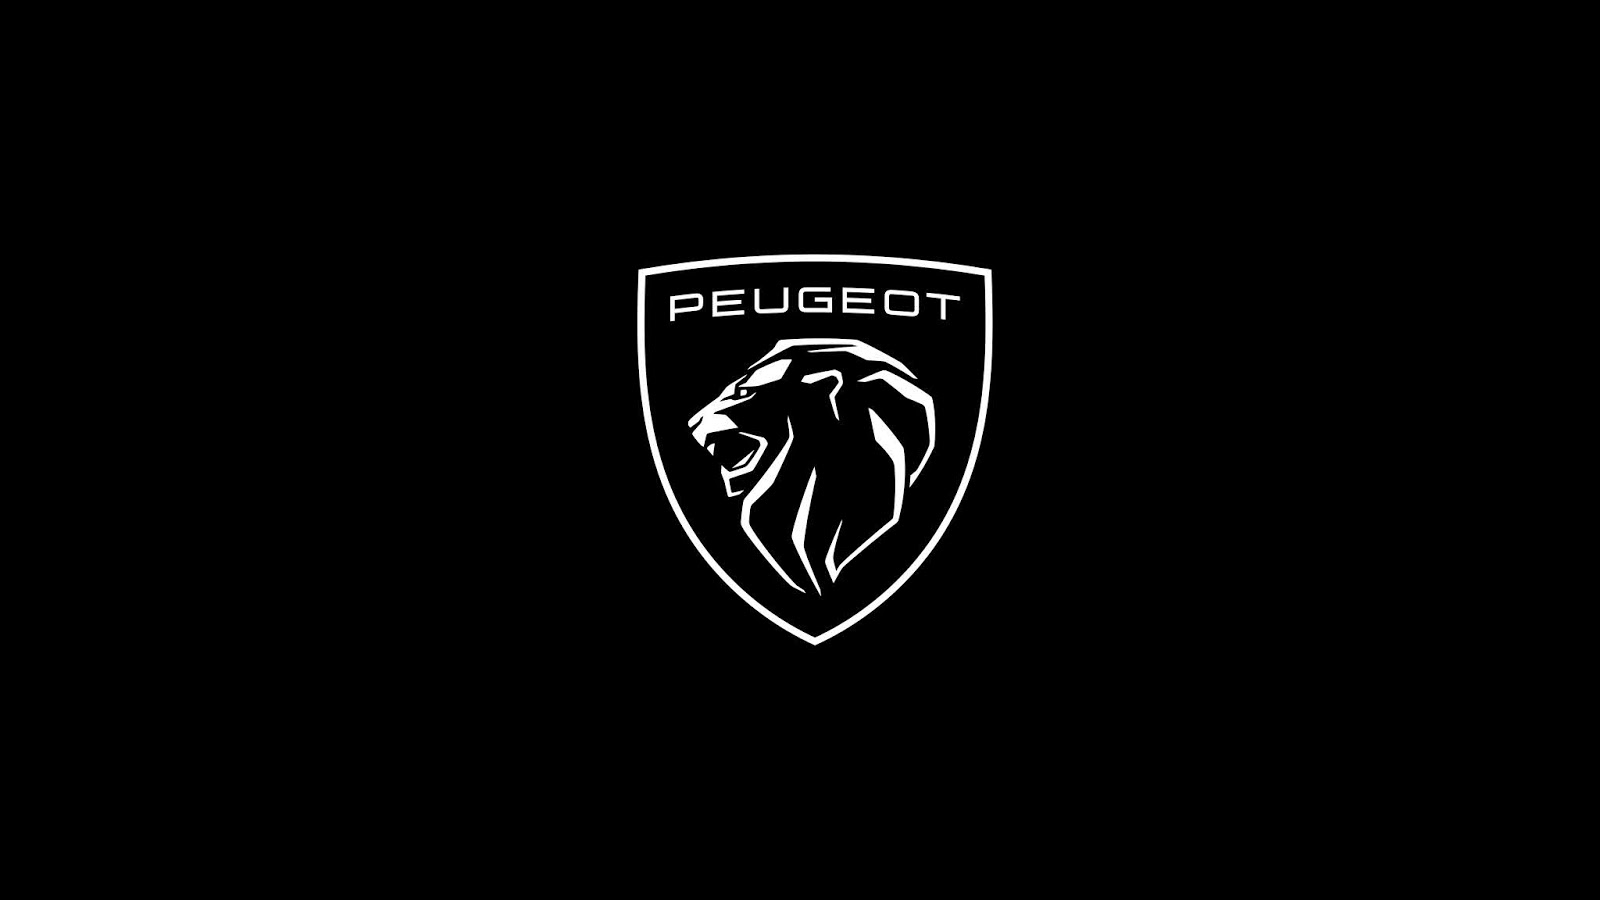 PEUGEOT PR NEWLOGO BLACK 4 1 Peugeot : Πρώτη στις εταιρικές πωλήσεις για 2 συνεχόμενα έτη